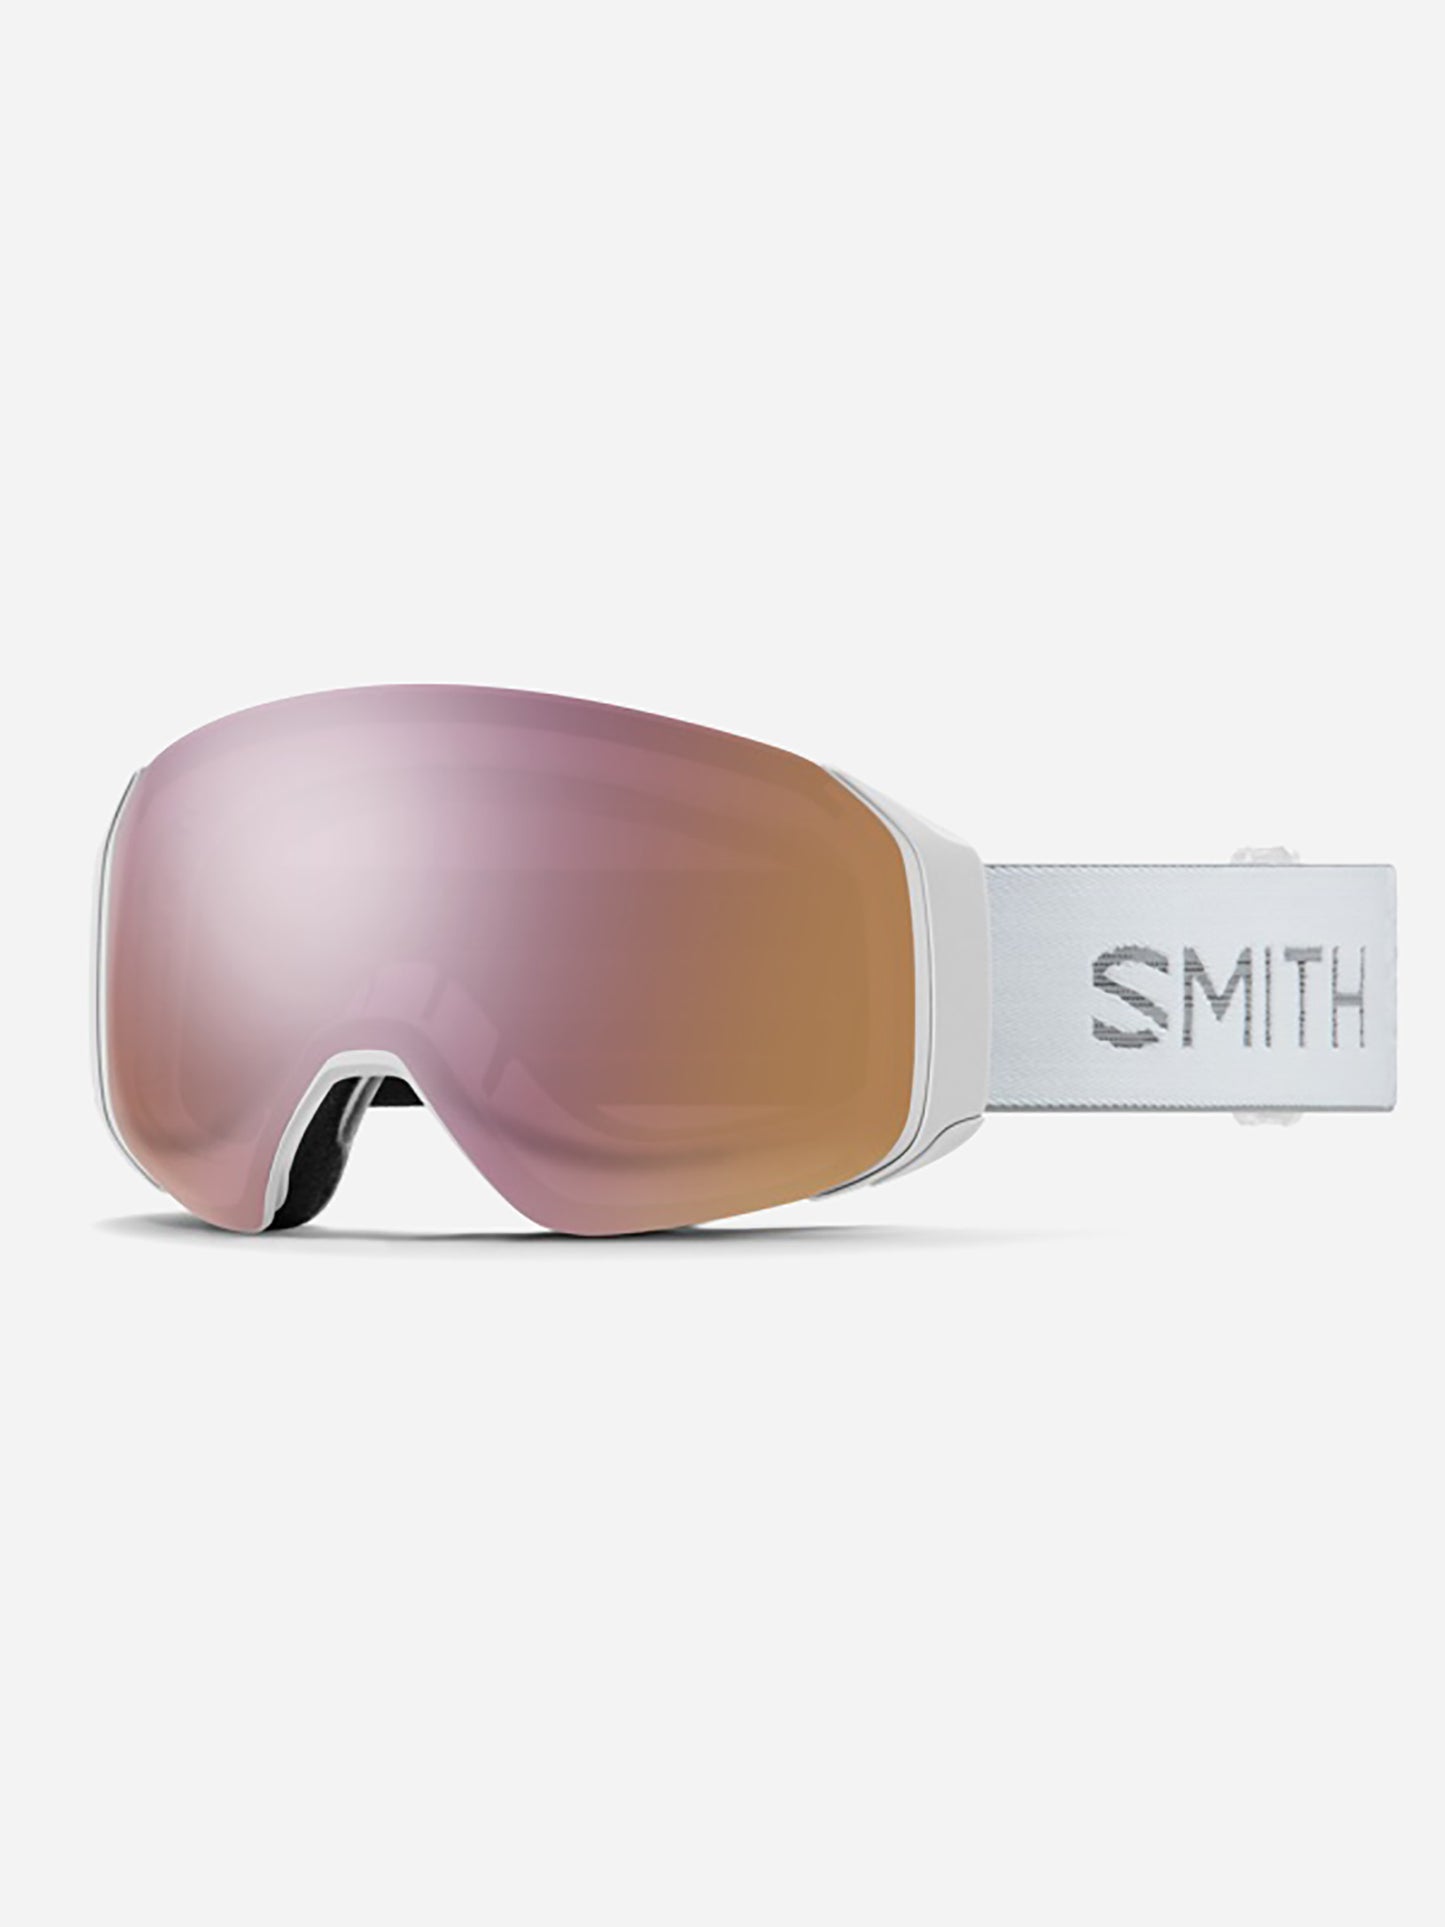 Smith 4D MAG S Low Bridge Fit Women's Snow Goggle